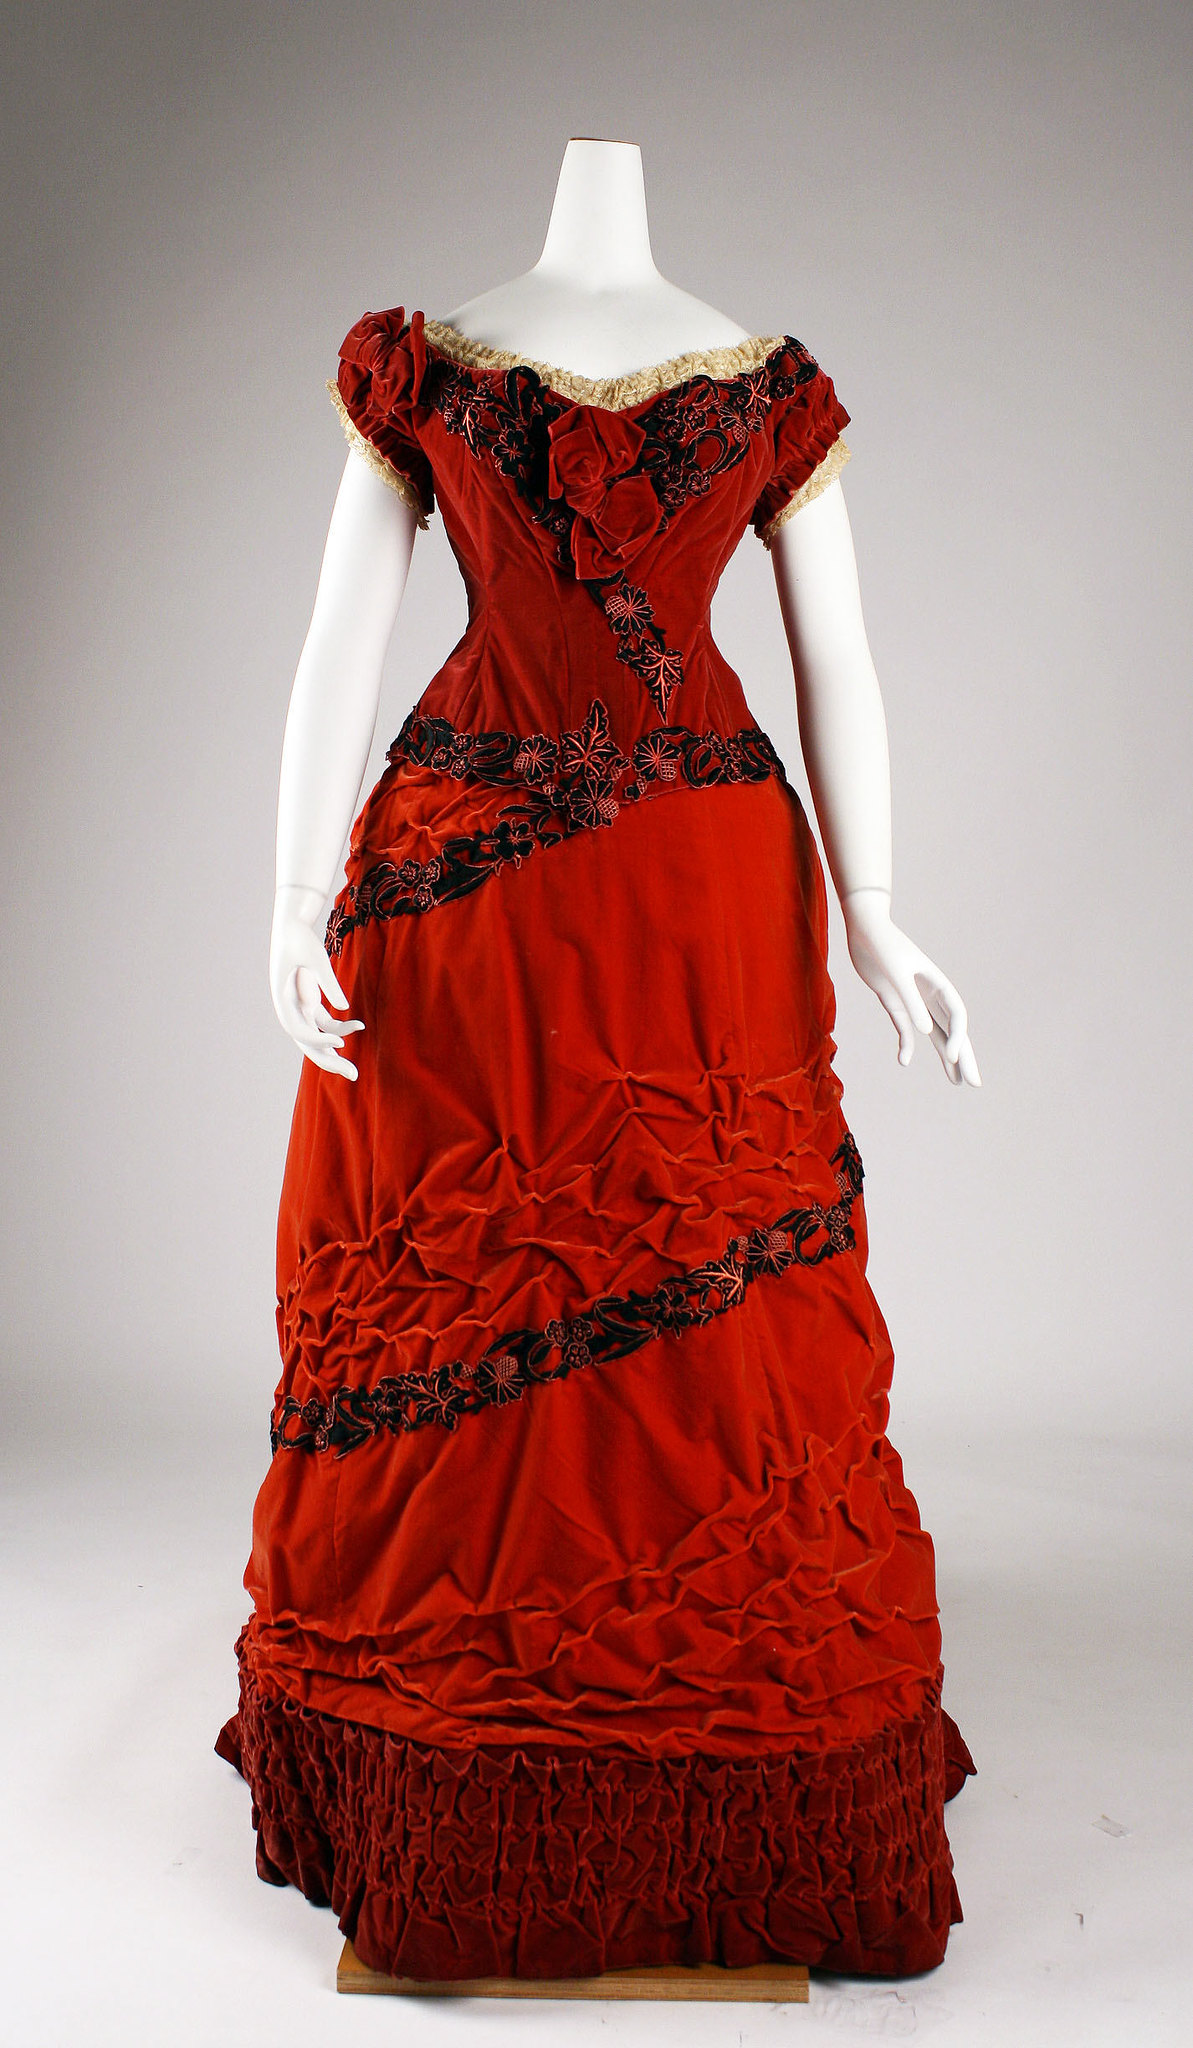 1875 Ball gown. British. Silk, cotton. metmuseum